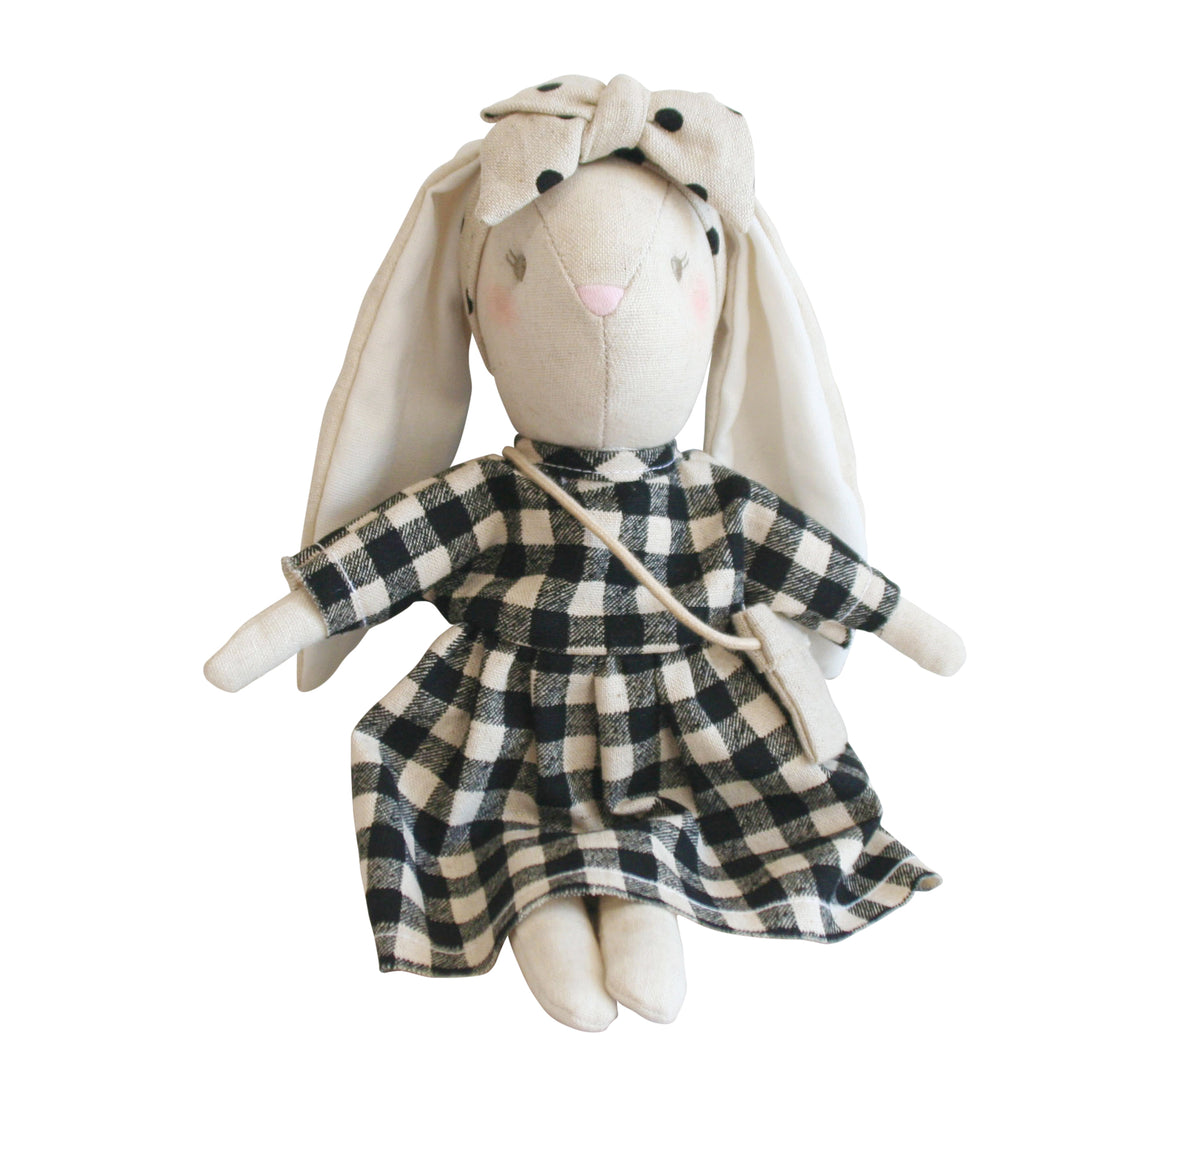 Mini Sofia Bunny Black Gingham (27cm)